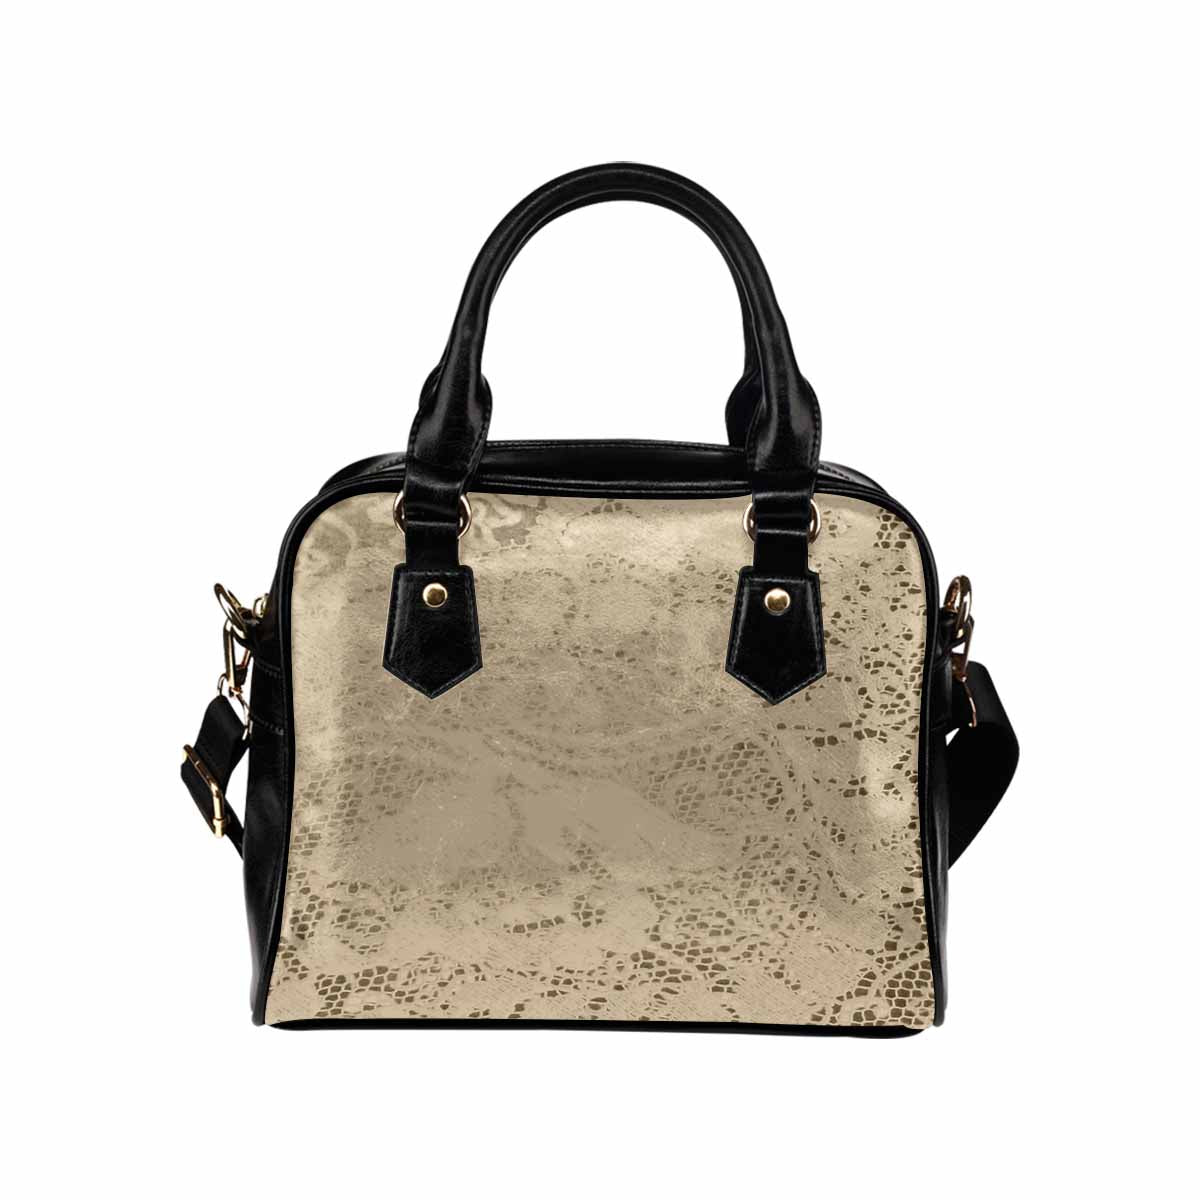 Victorian lace print, cute handbag, Mod 19163453, design 26